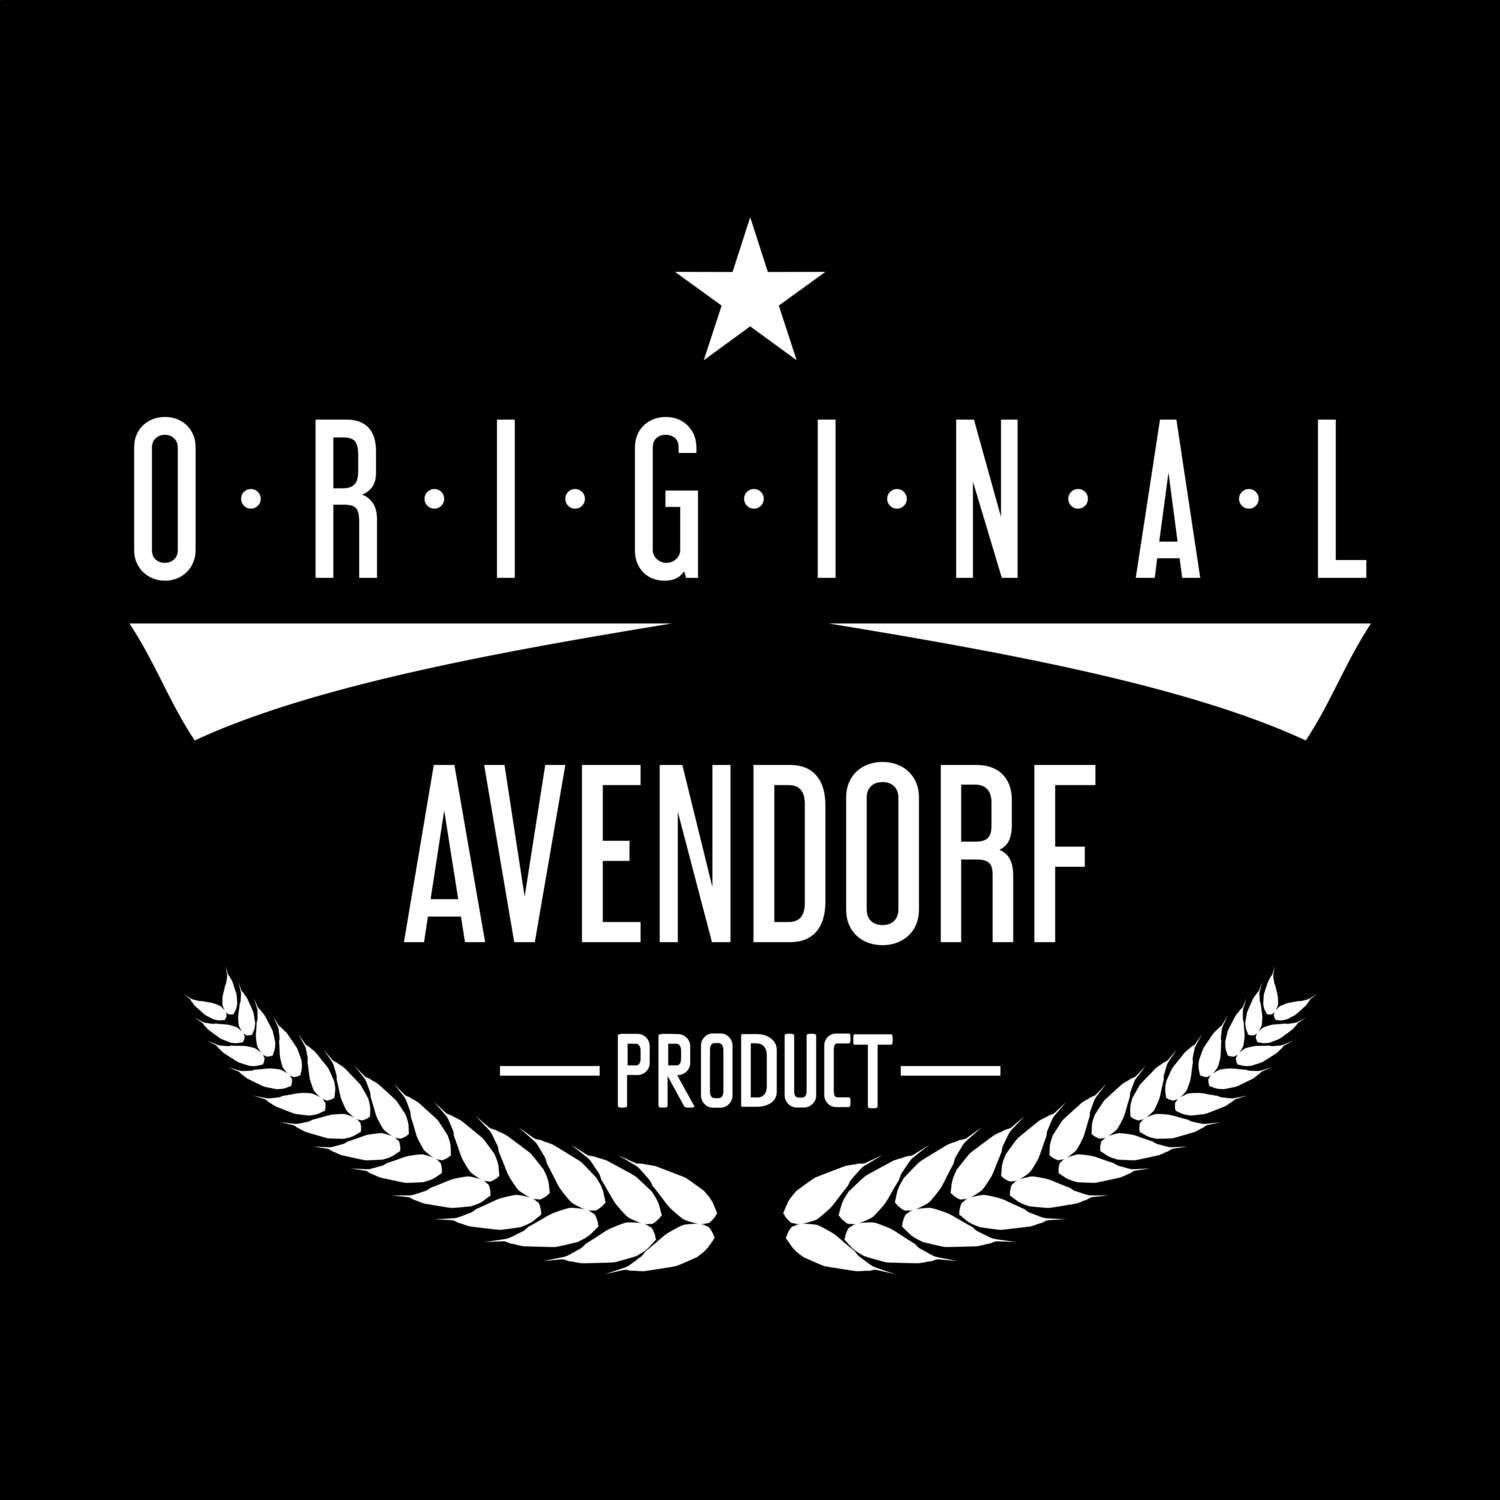 Avendorf T-Shirt »Original Product«